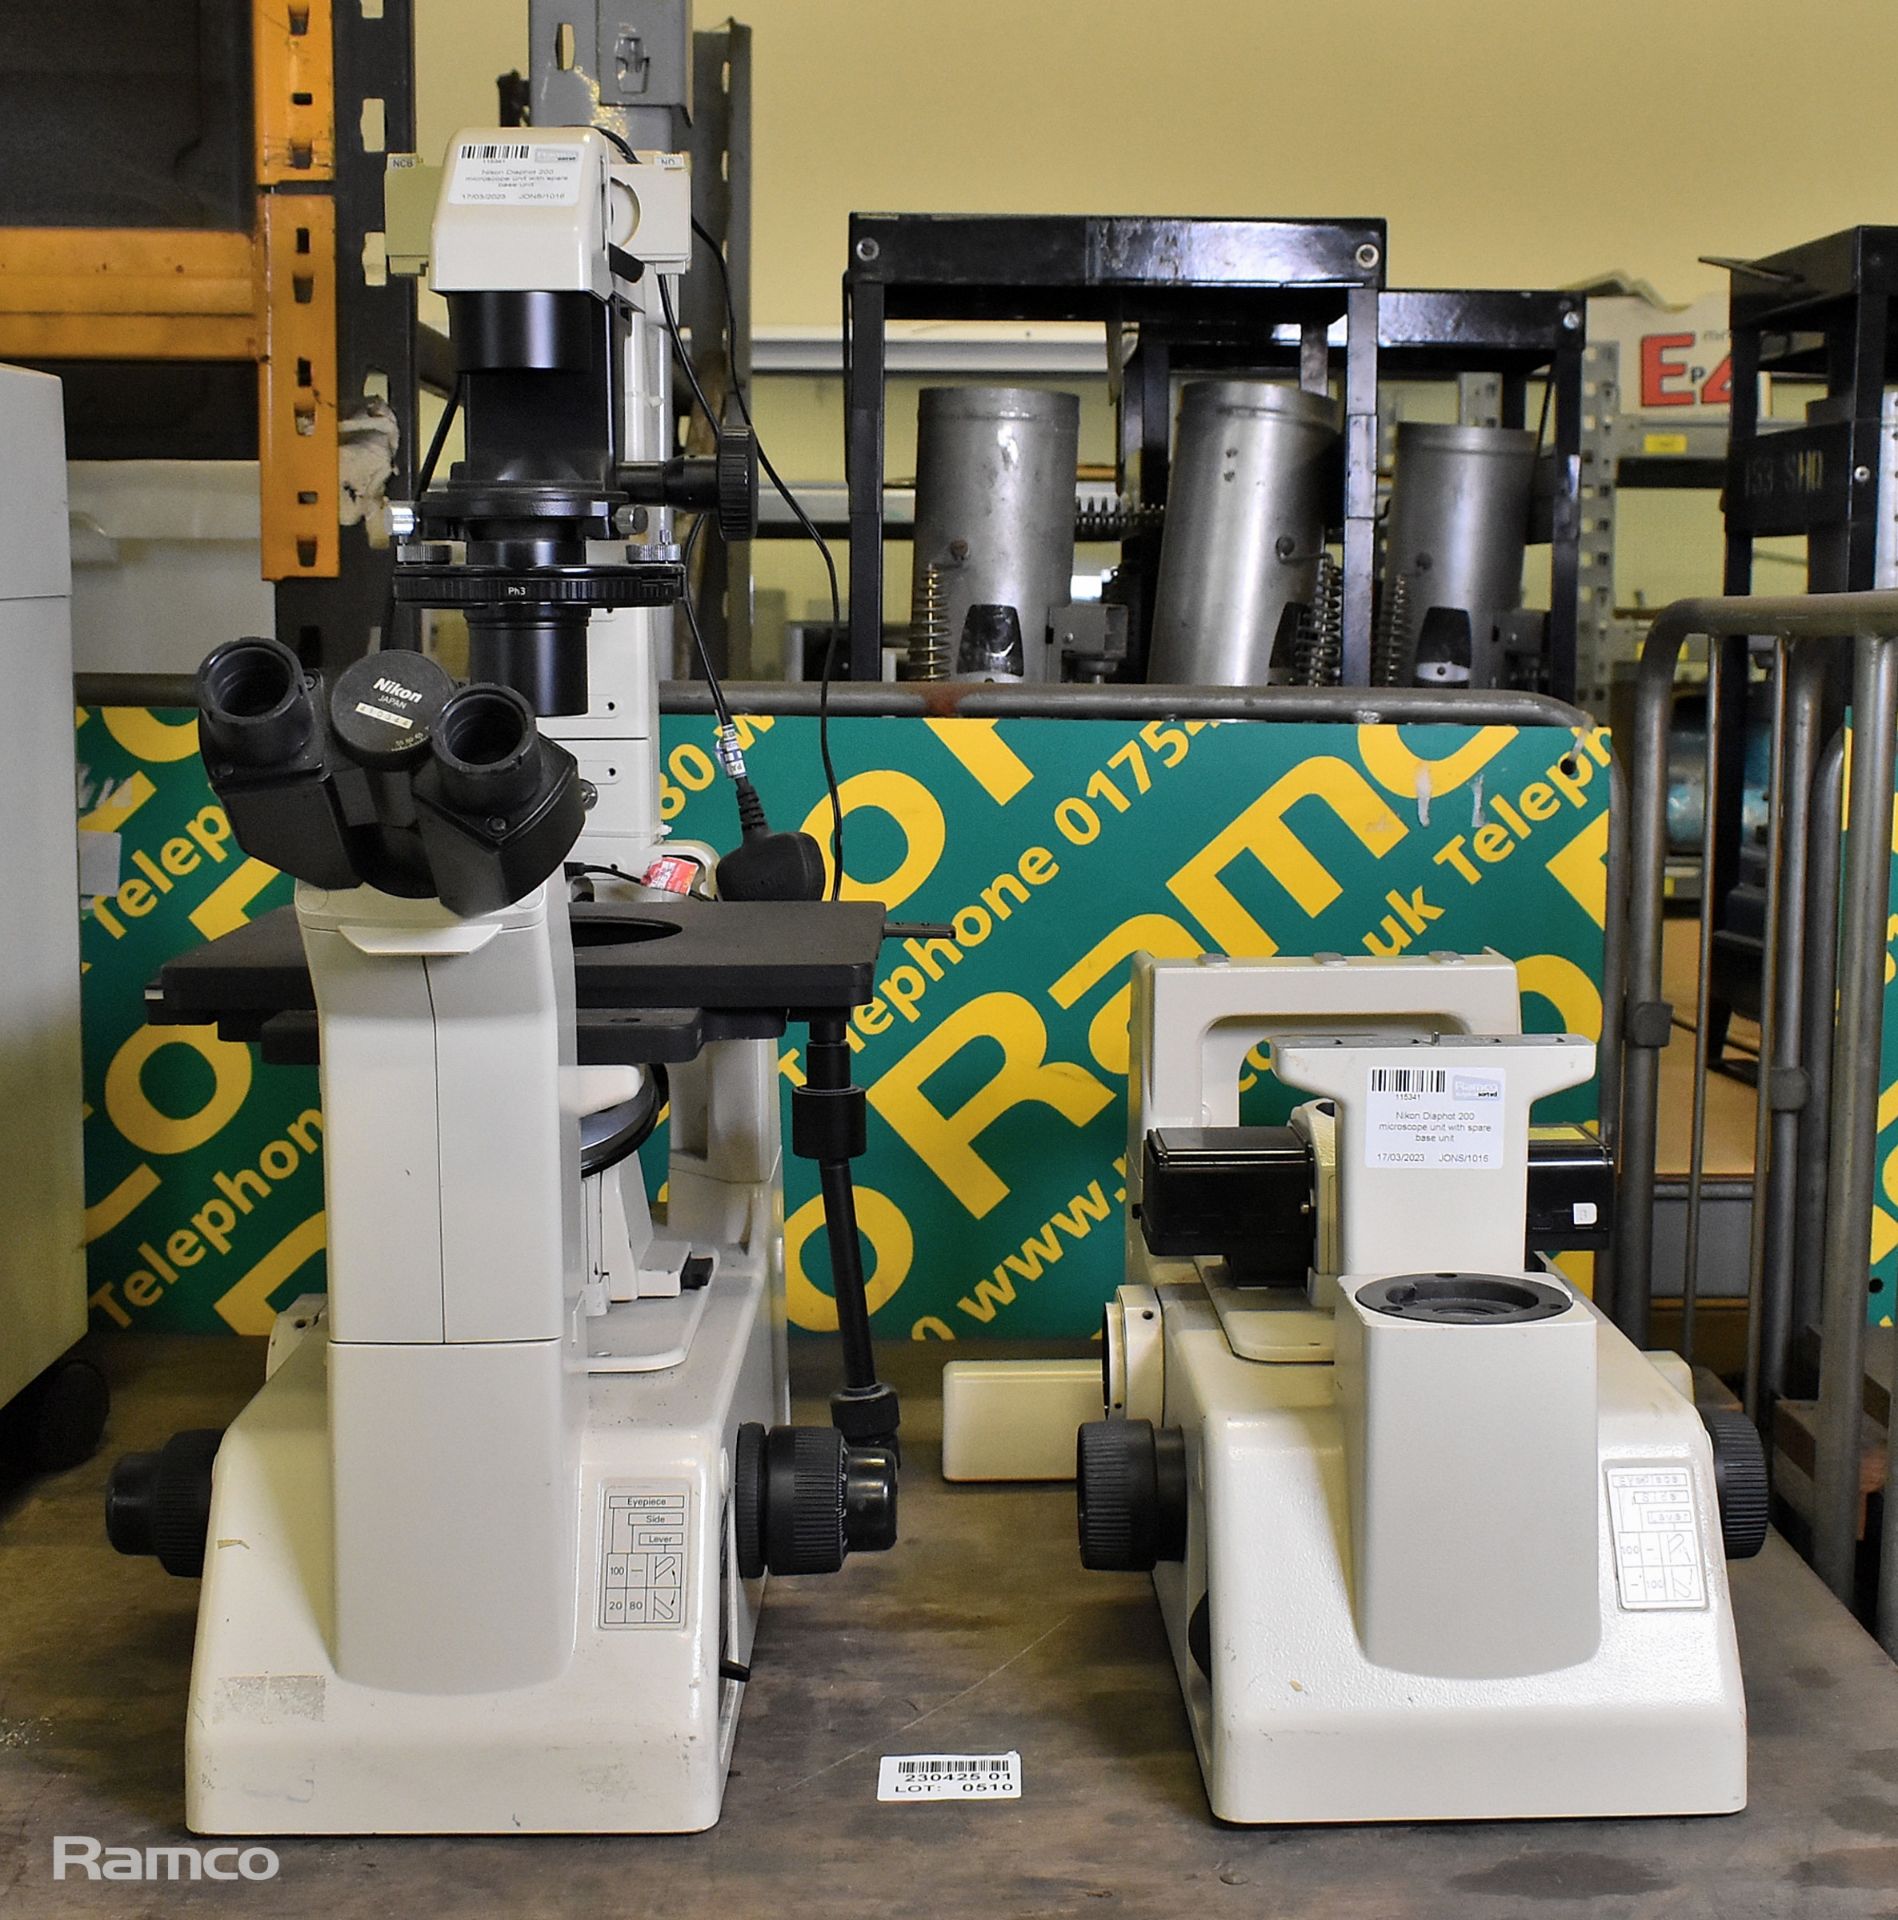 Nikon Diaphot 200 microscope unit with spare base unit